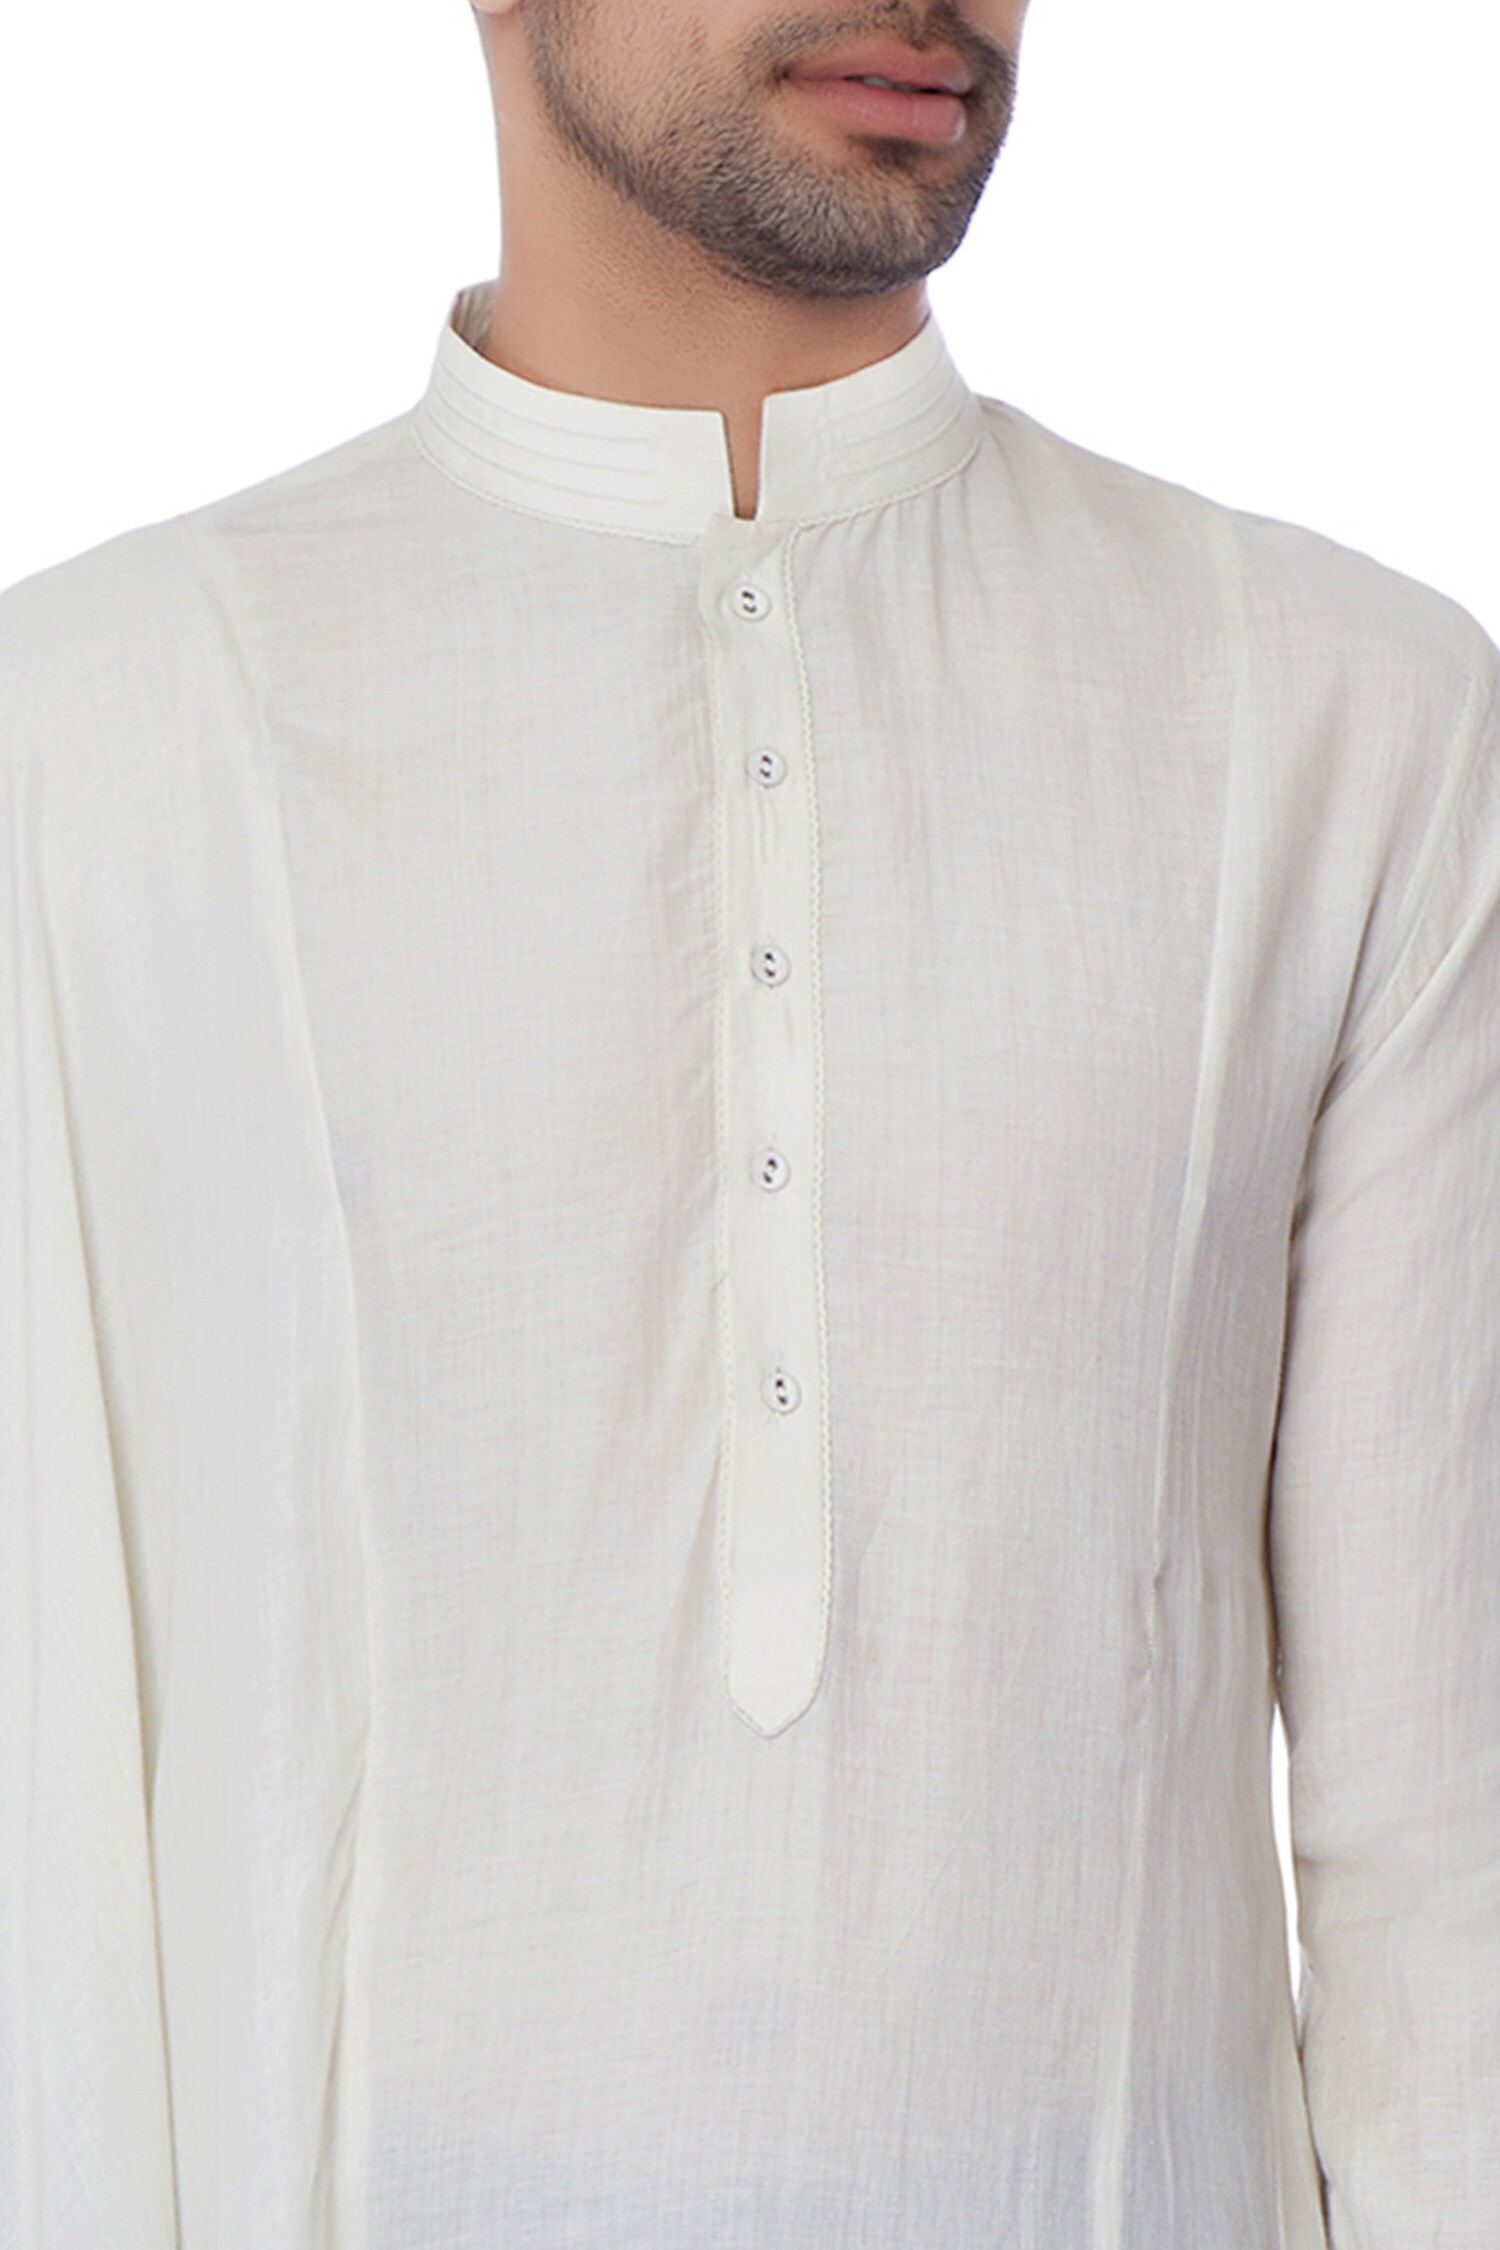 Buy White & black draped tie & dye kurta by Bloni - Men at Aza Fashions